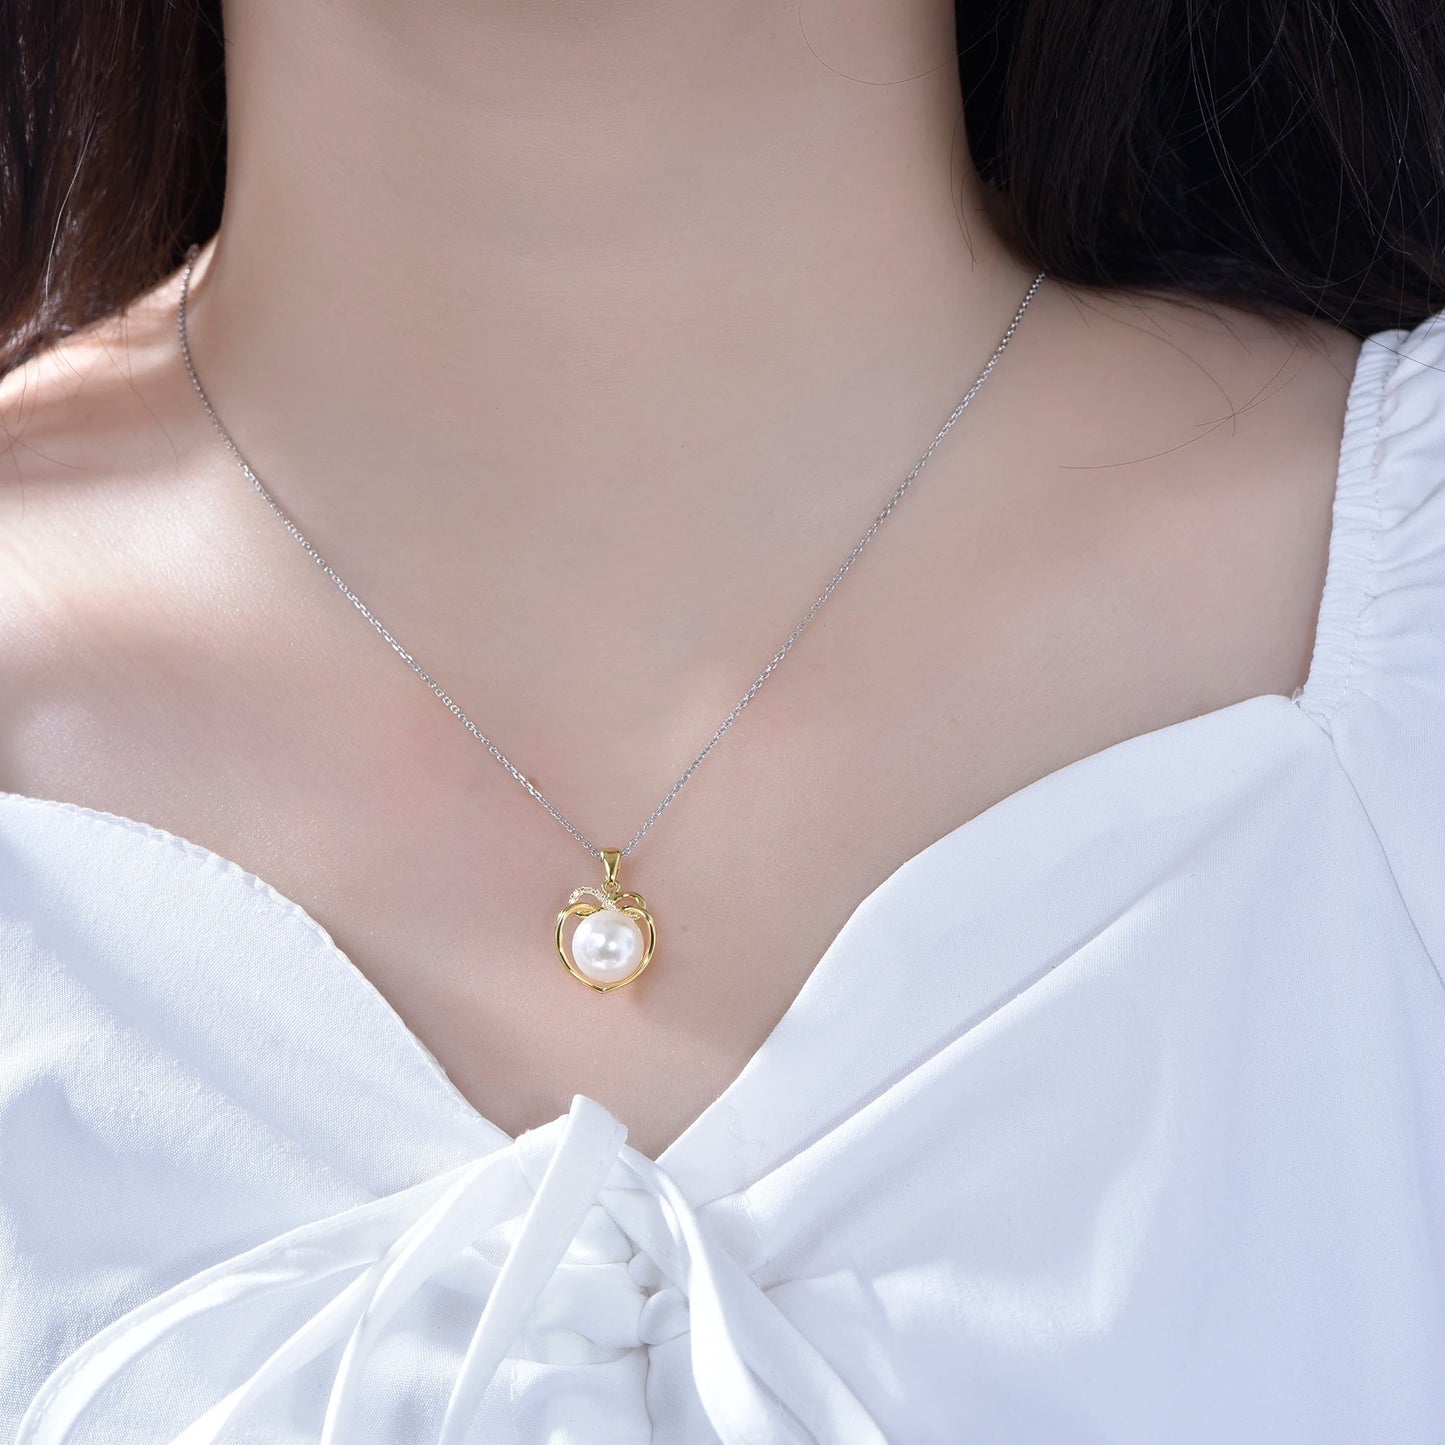 Simple bow Sshell pearl 3A whitecubic zirconia elegant 18K gold plating choker necklace Kirin Jewelry